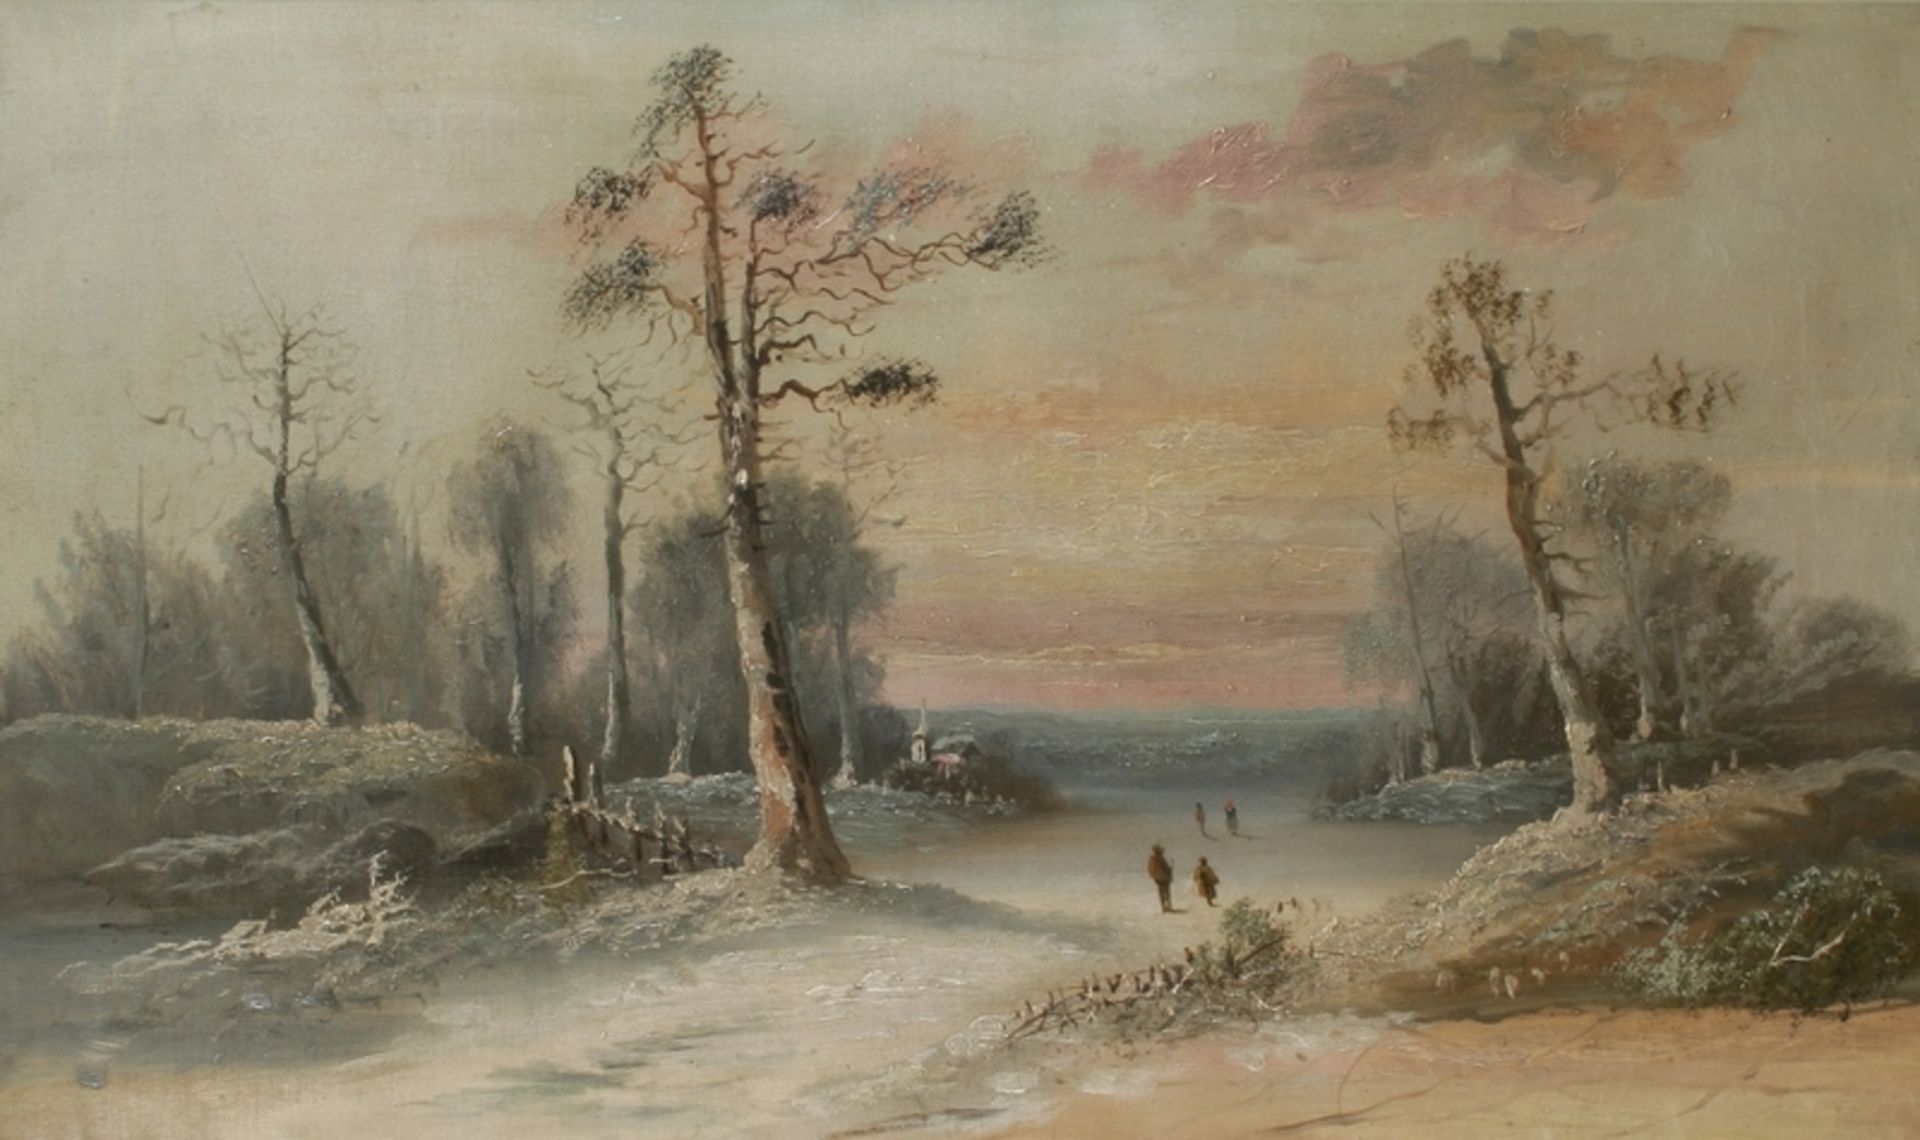 Anonymer Maler, 19. Jh. "Winterlandschaft im Abendrot", Öl/Lw., 56 x 90 cm, rest. bed.